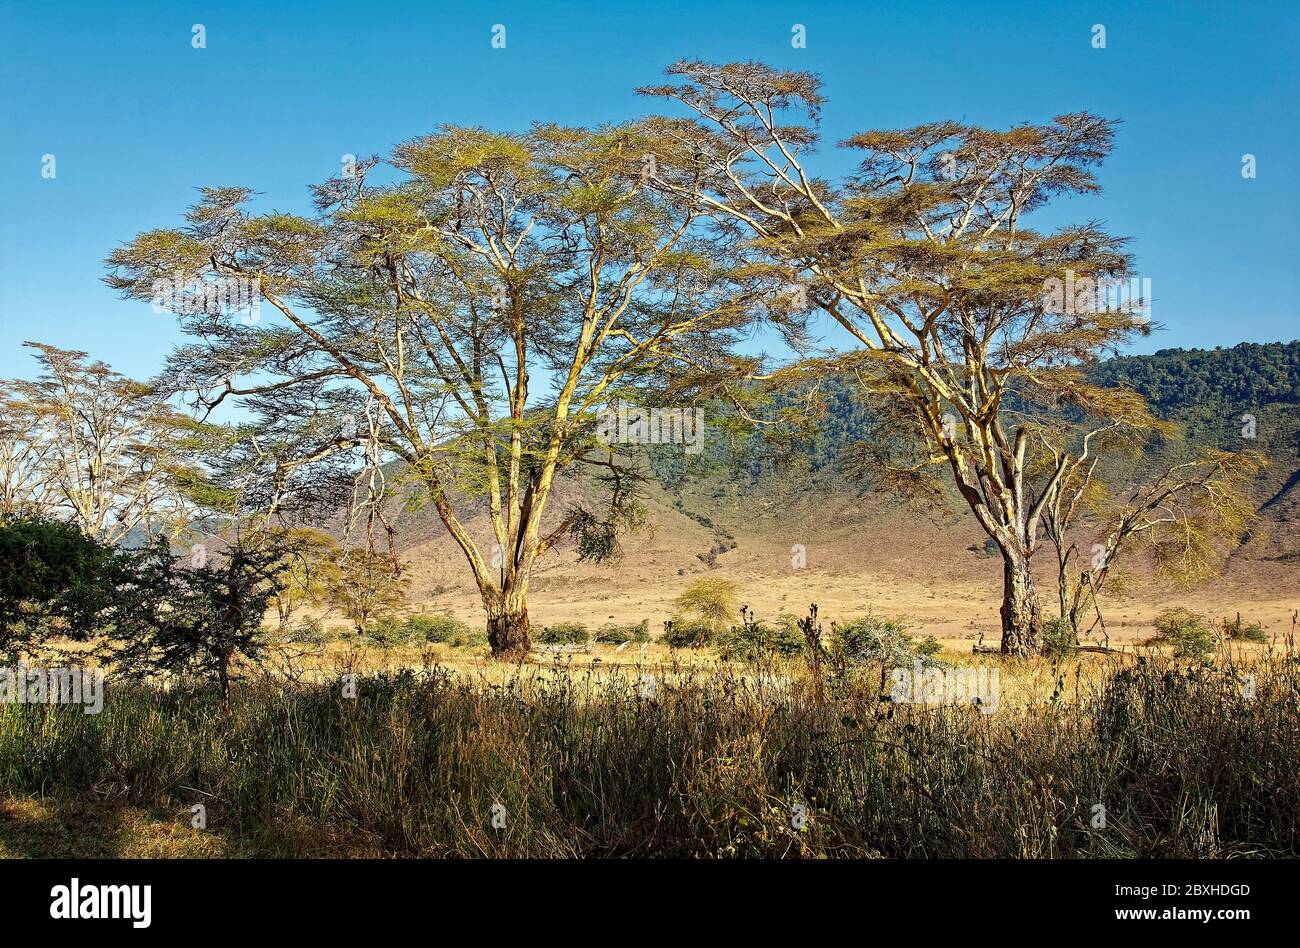 Yellow bark acacia trees, Acacia xanthophloea, smooth bark at top, gnarled bark on bottom, fever tree, hard wood, feathery foliage, nature, scene, lan Stock Photo